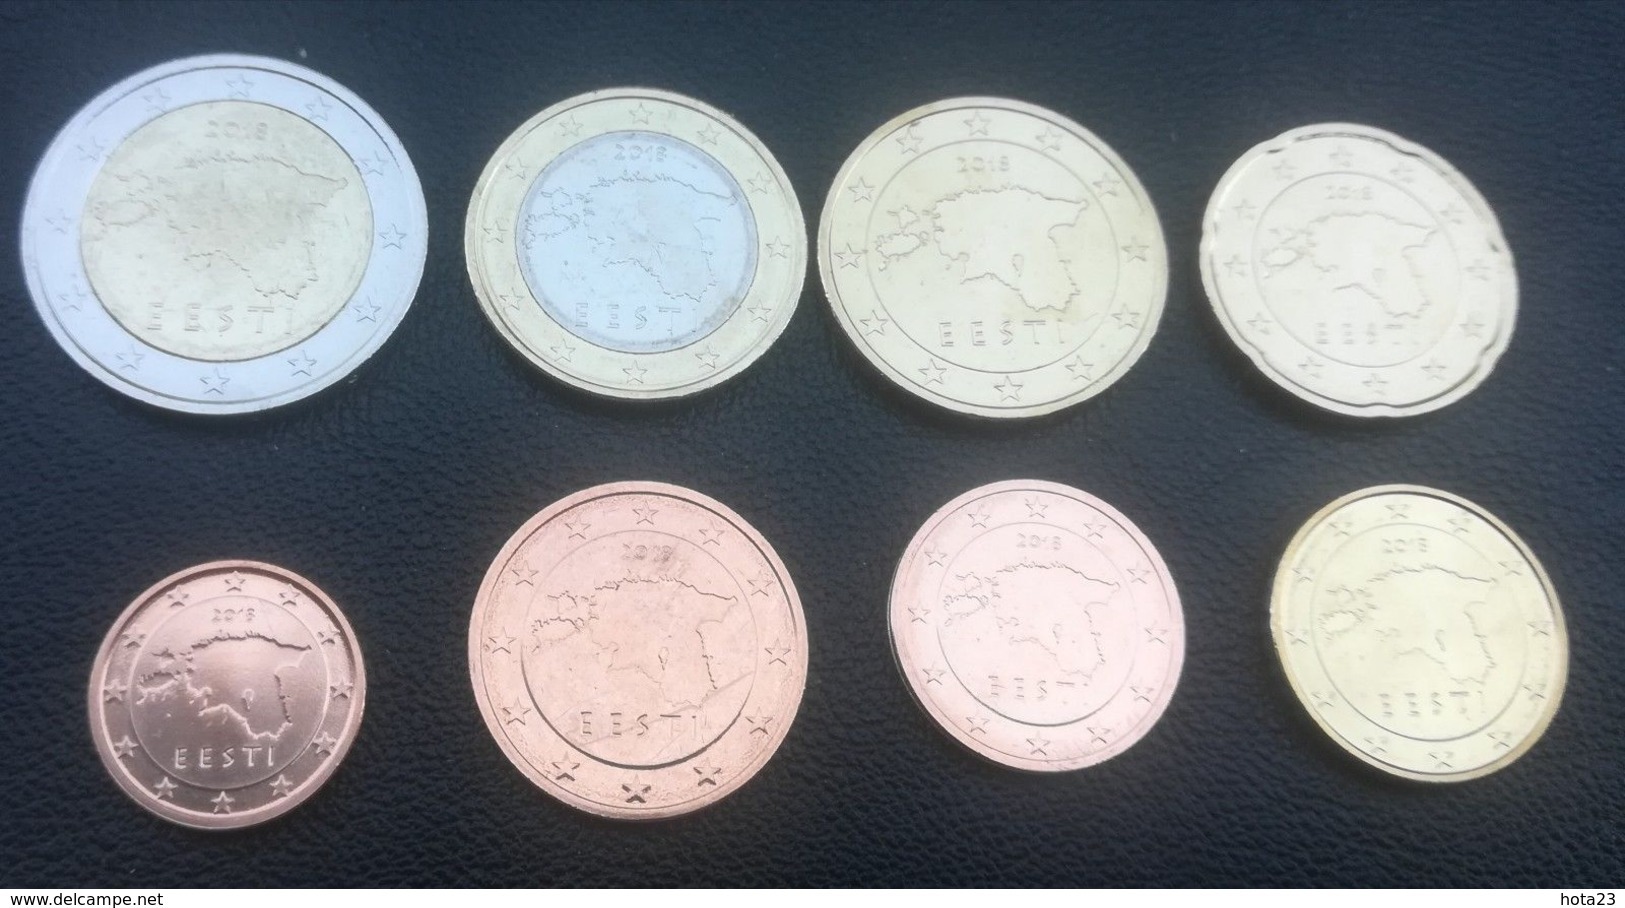 NEU 2018 Jahr Estland Kms 1 Cent - 2 Euro 3,88 Euro Unc From Mint Roll - Estonia